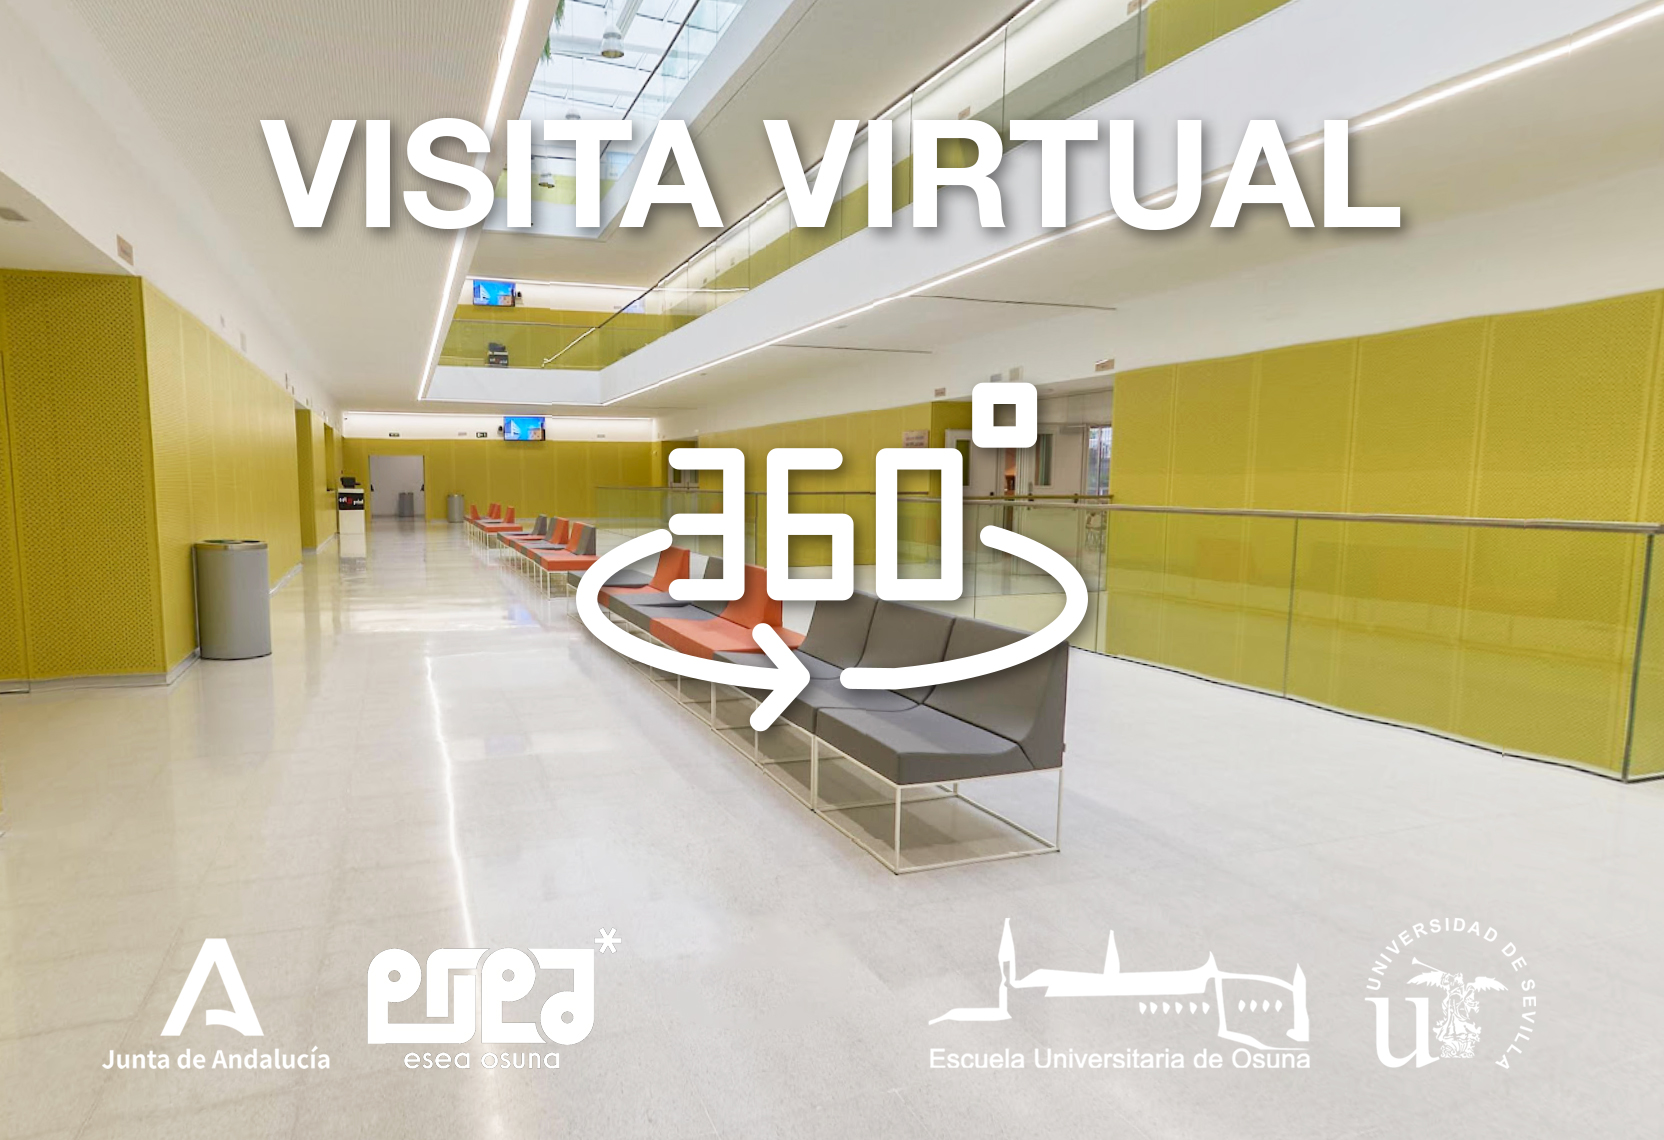 Visita virtual 360